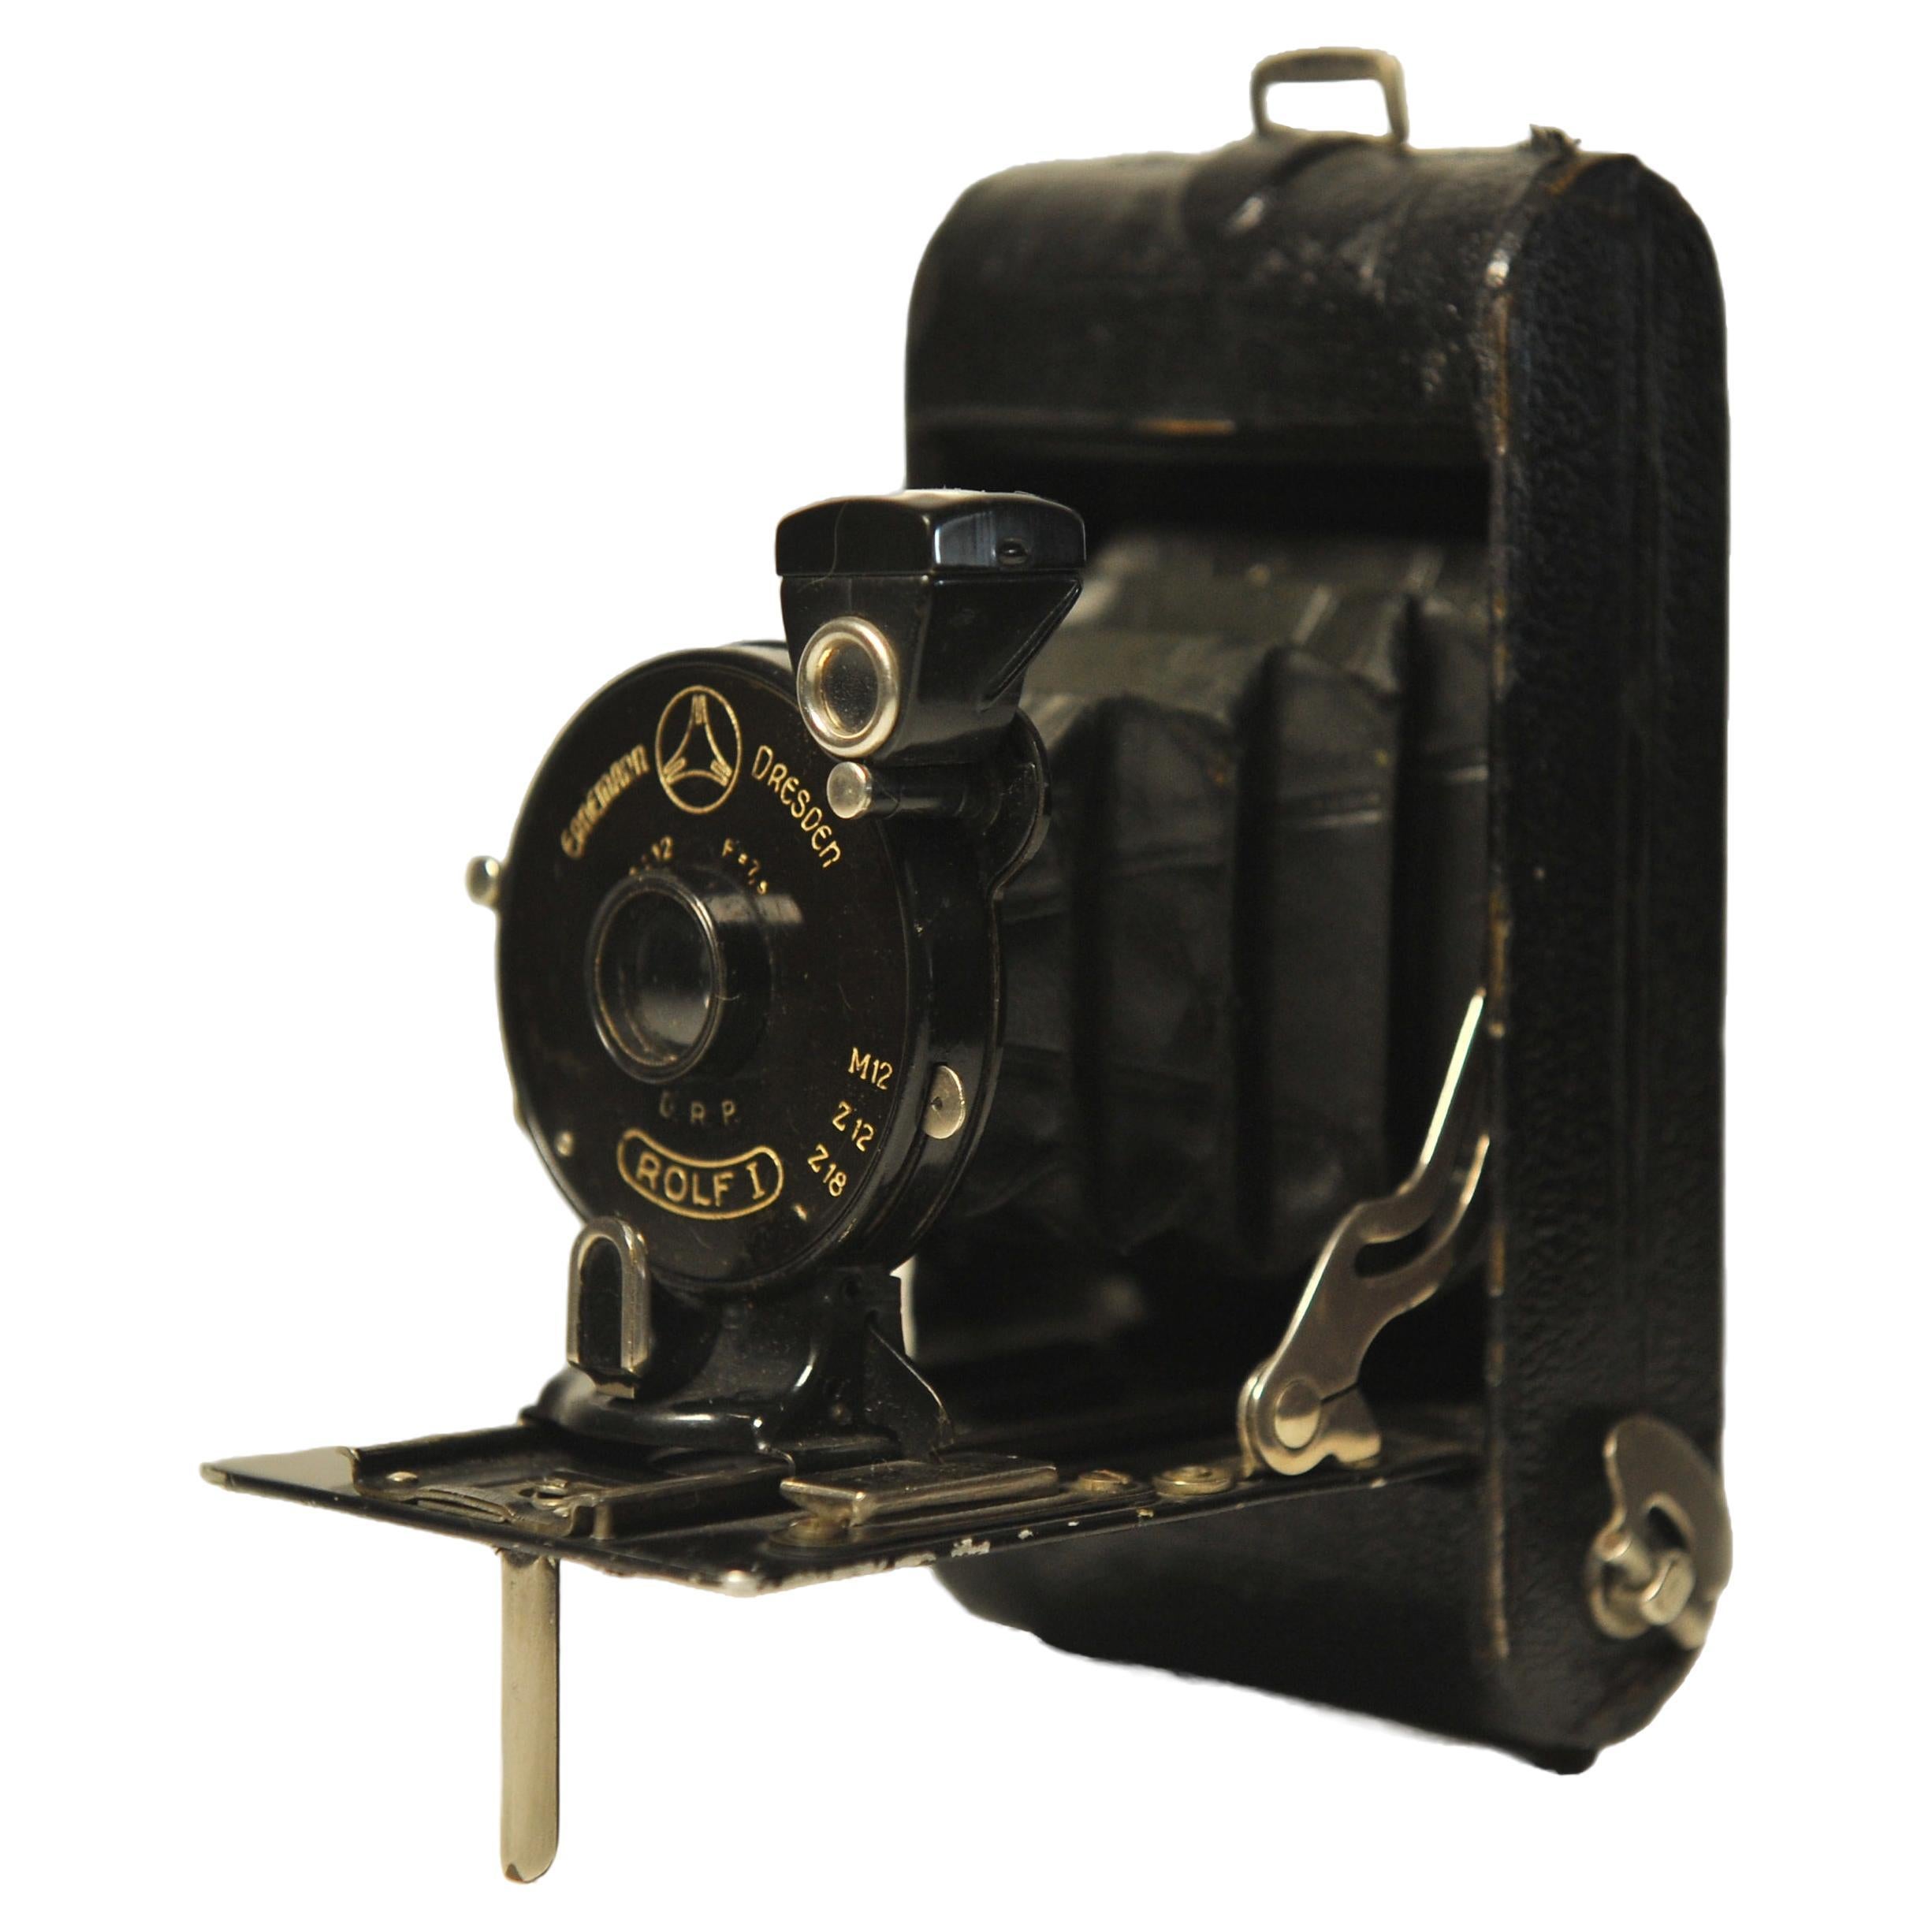 Ernemann ROLF II Folding 127 Rollfilm Camera With 75mm F12 Rapid Rectilinear For Sale